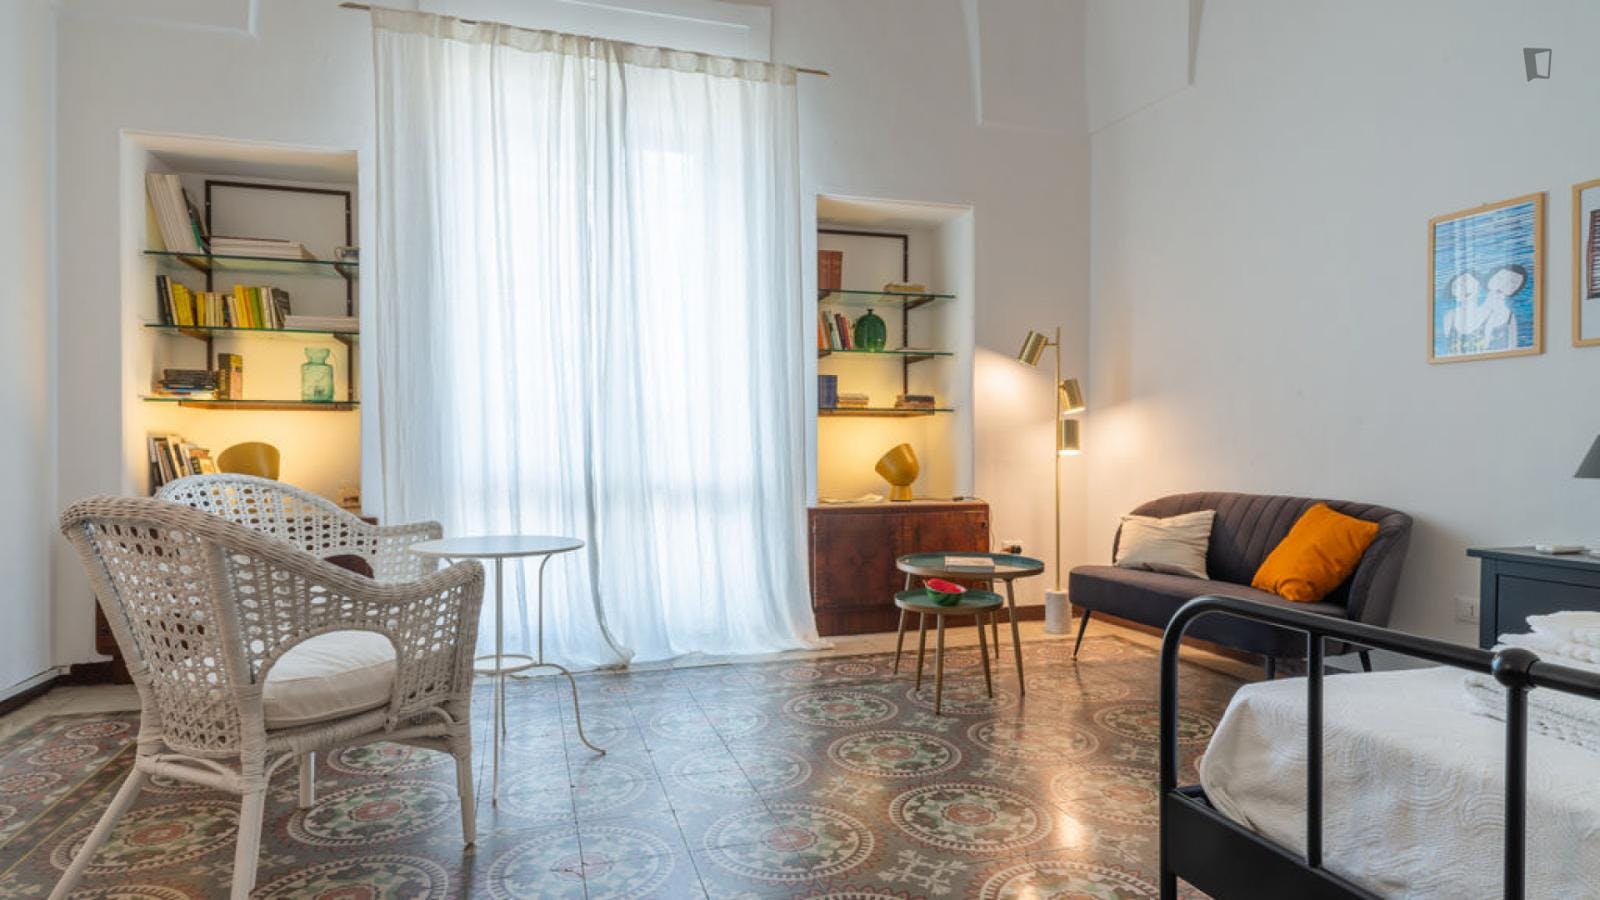 Lovely 1-bedroom apartment with balcony near Giardini Pubblici Giuseppe Garibaldi